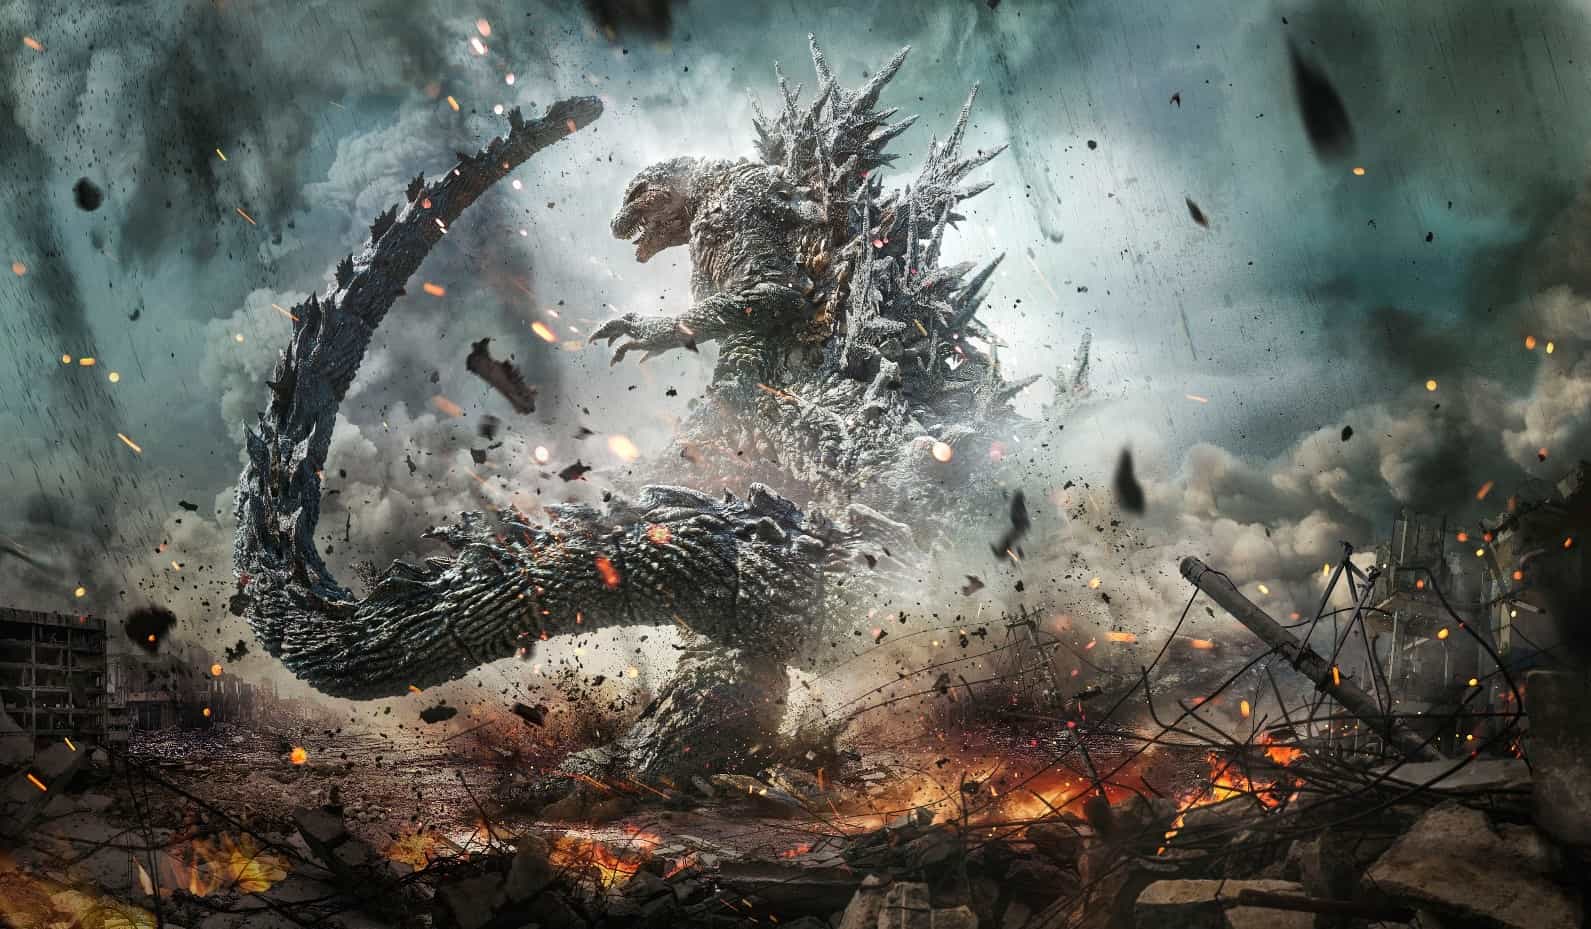 Godzilla Minus One: The First Godzilla Movie to Win an Academy Award